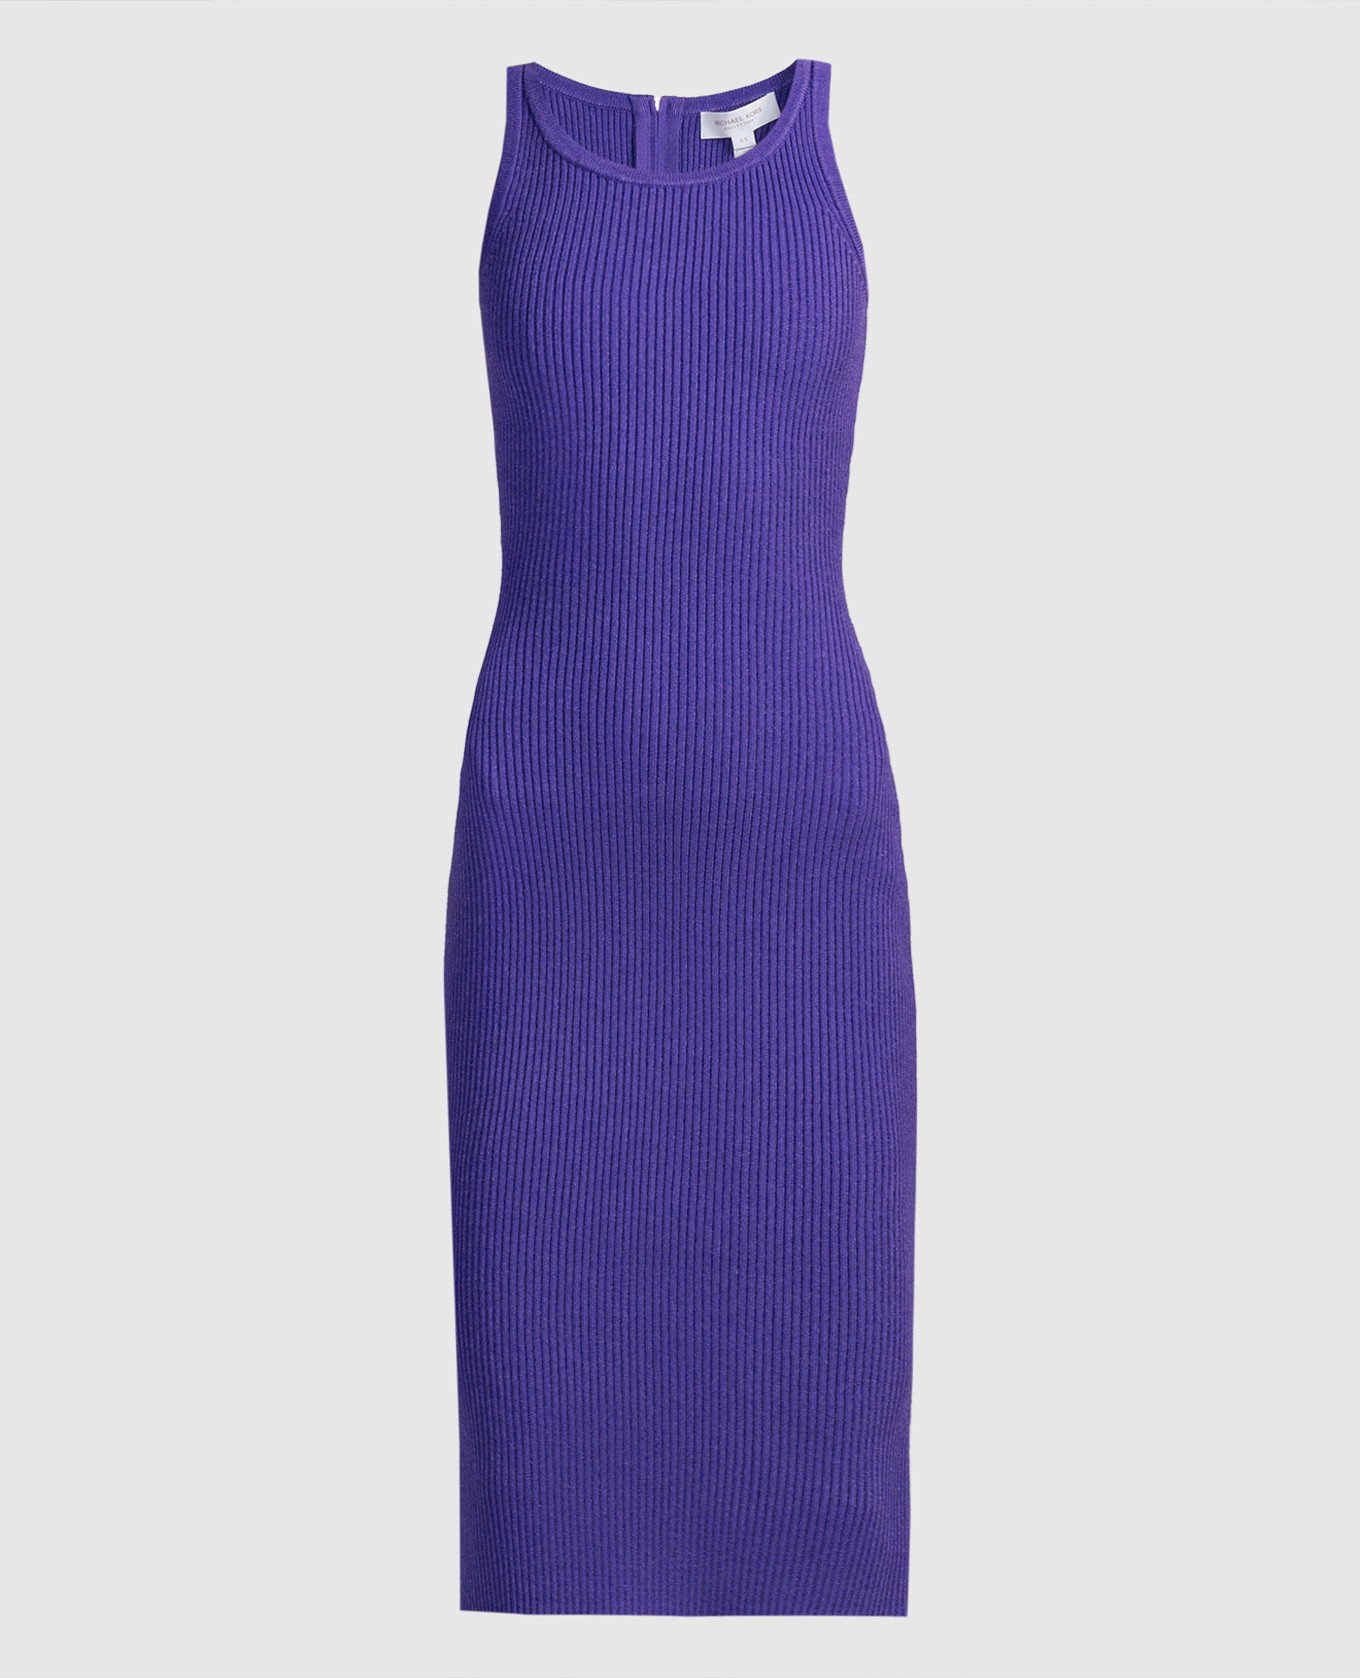 Purple sheath dress with a scar